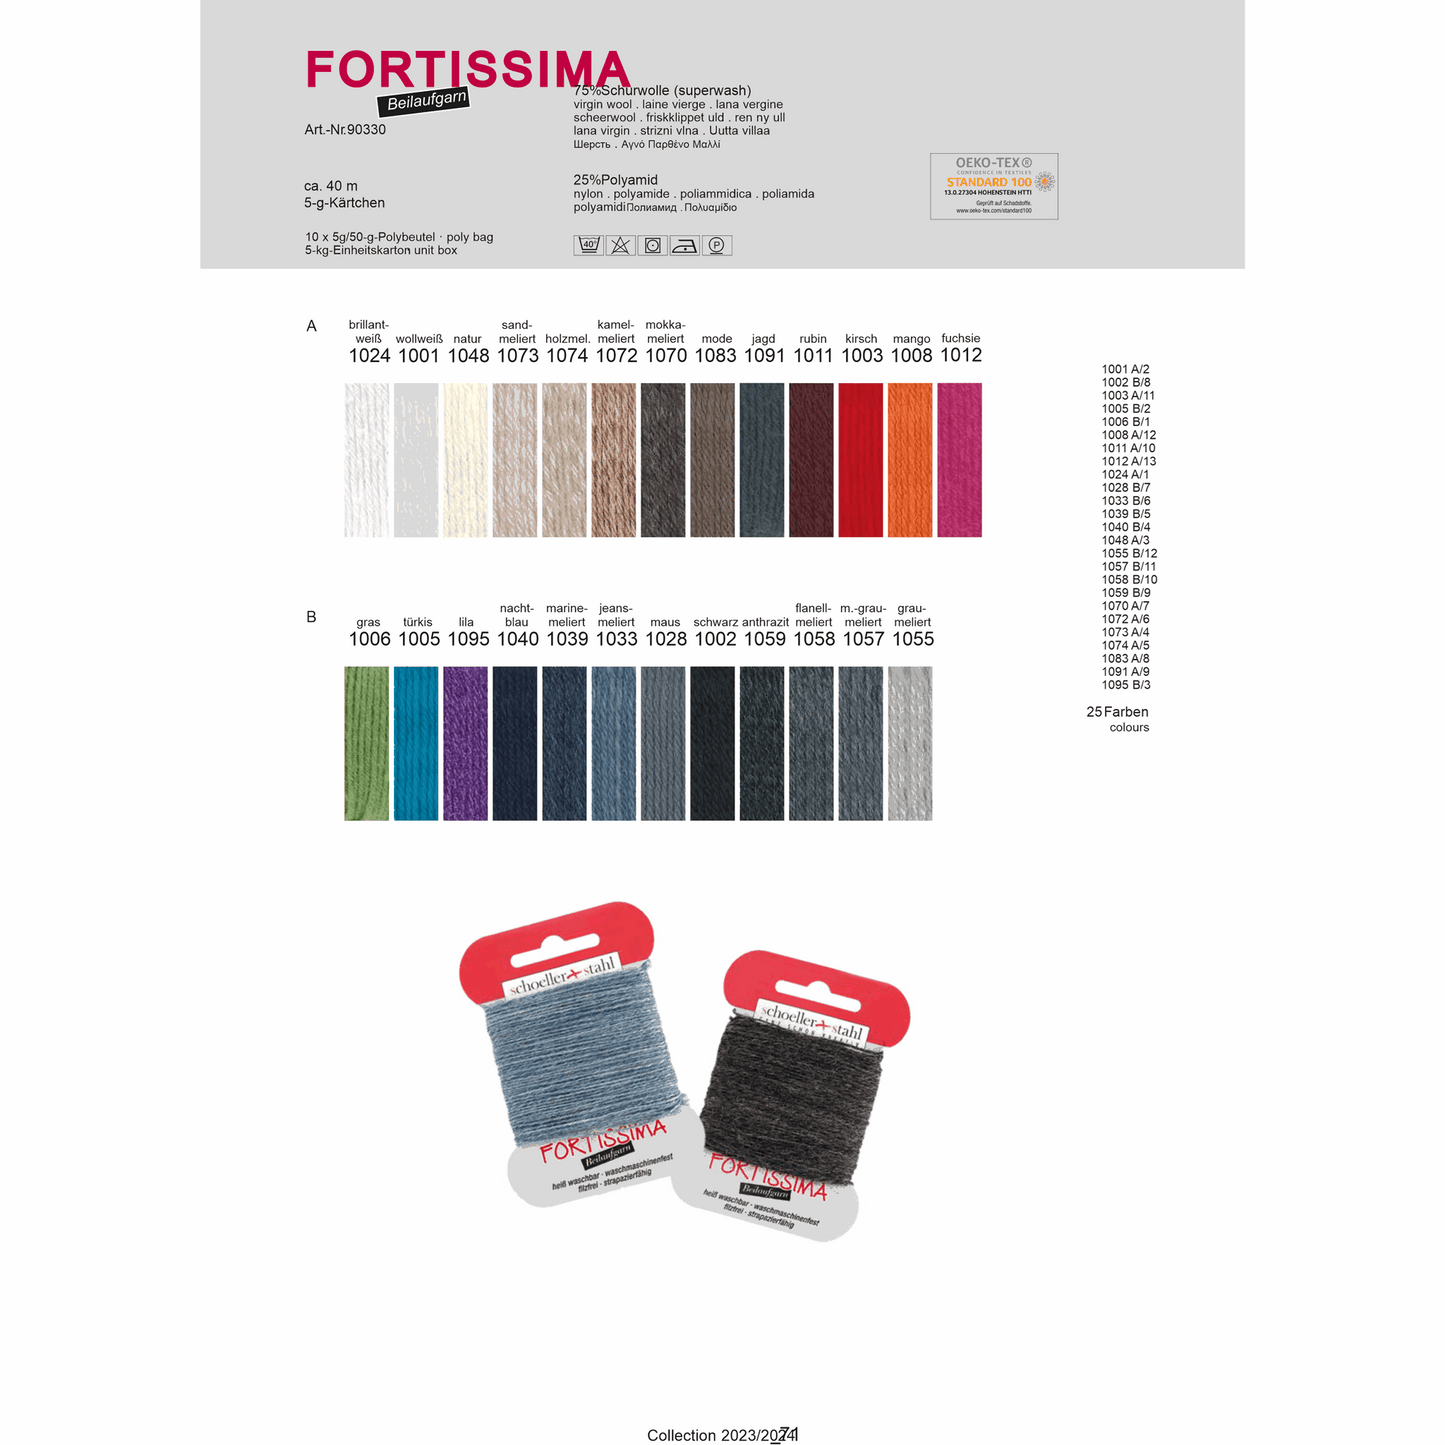 Fortissima thread 5g, 90330, color 1058, flannel mottled